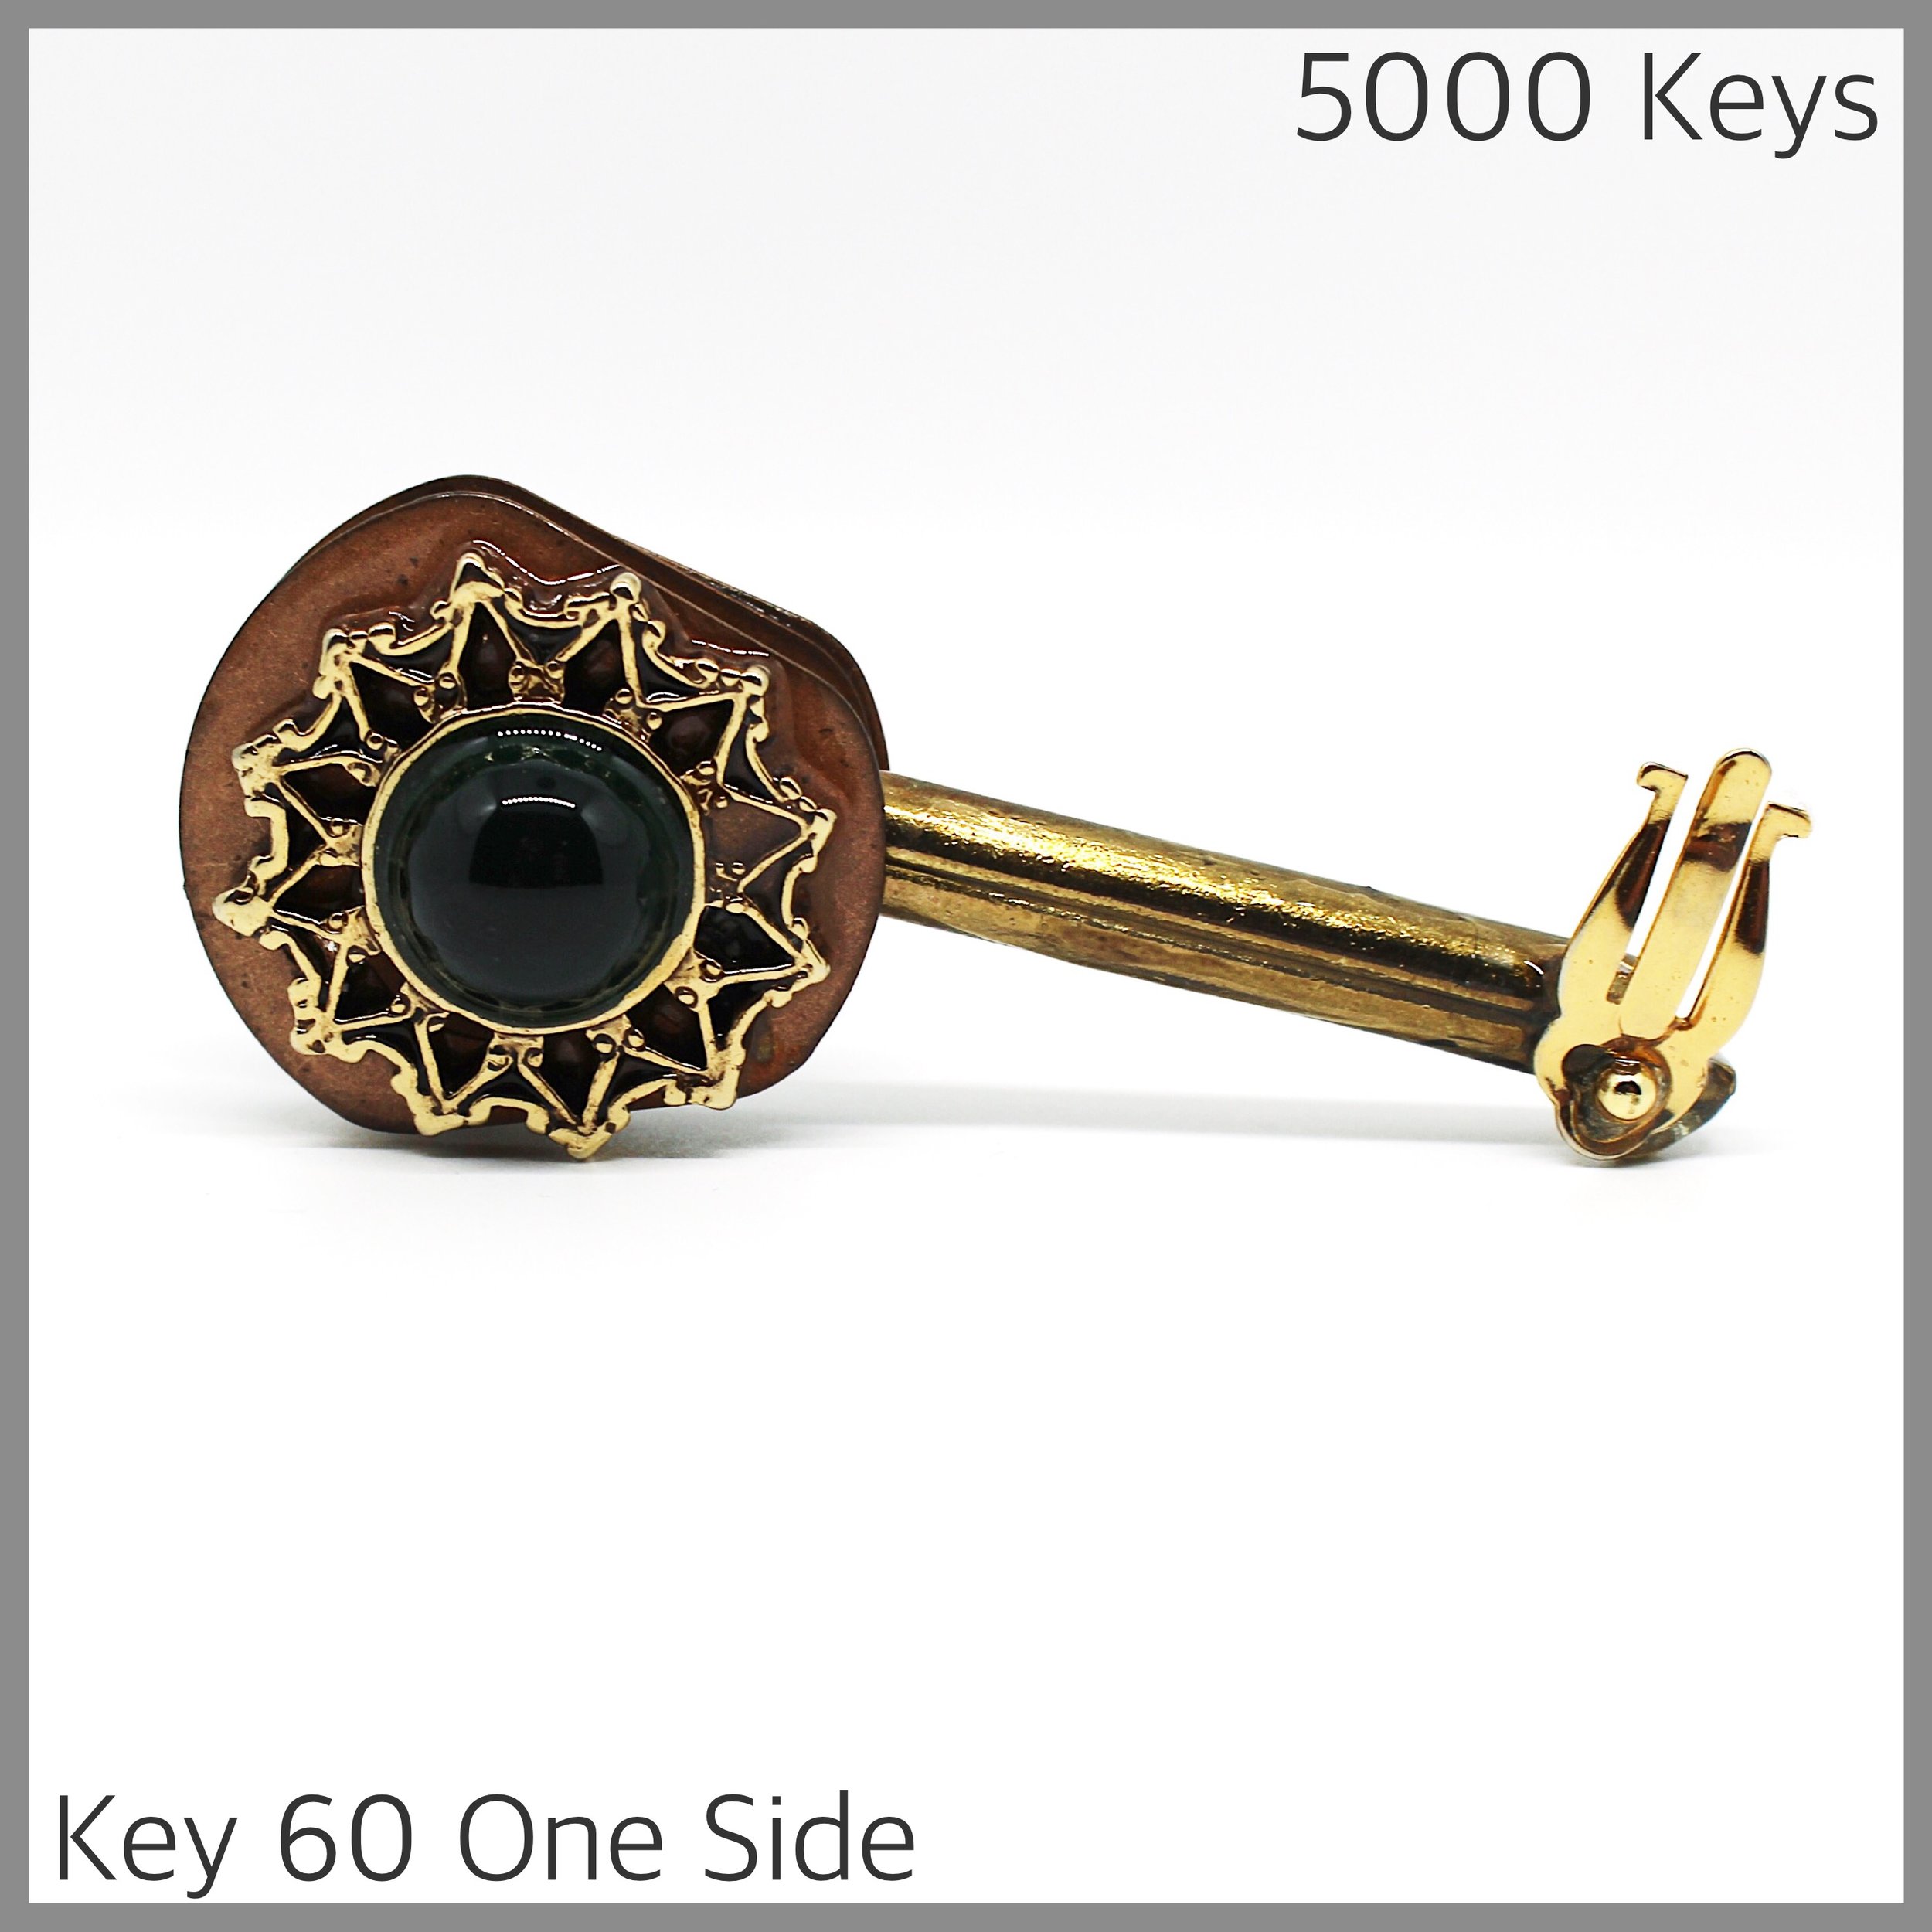 Key 60 one side - 1.JPG